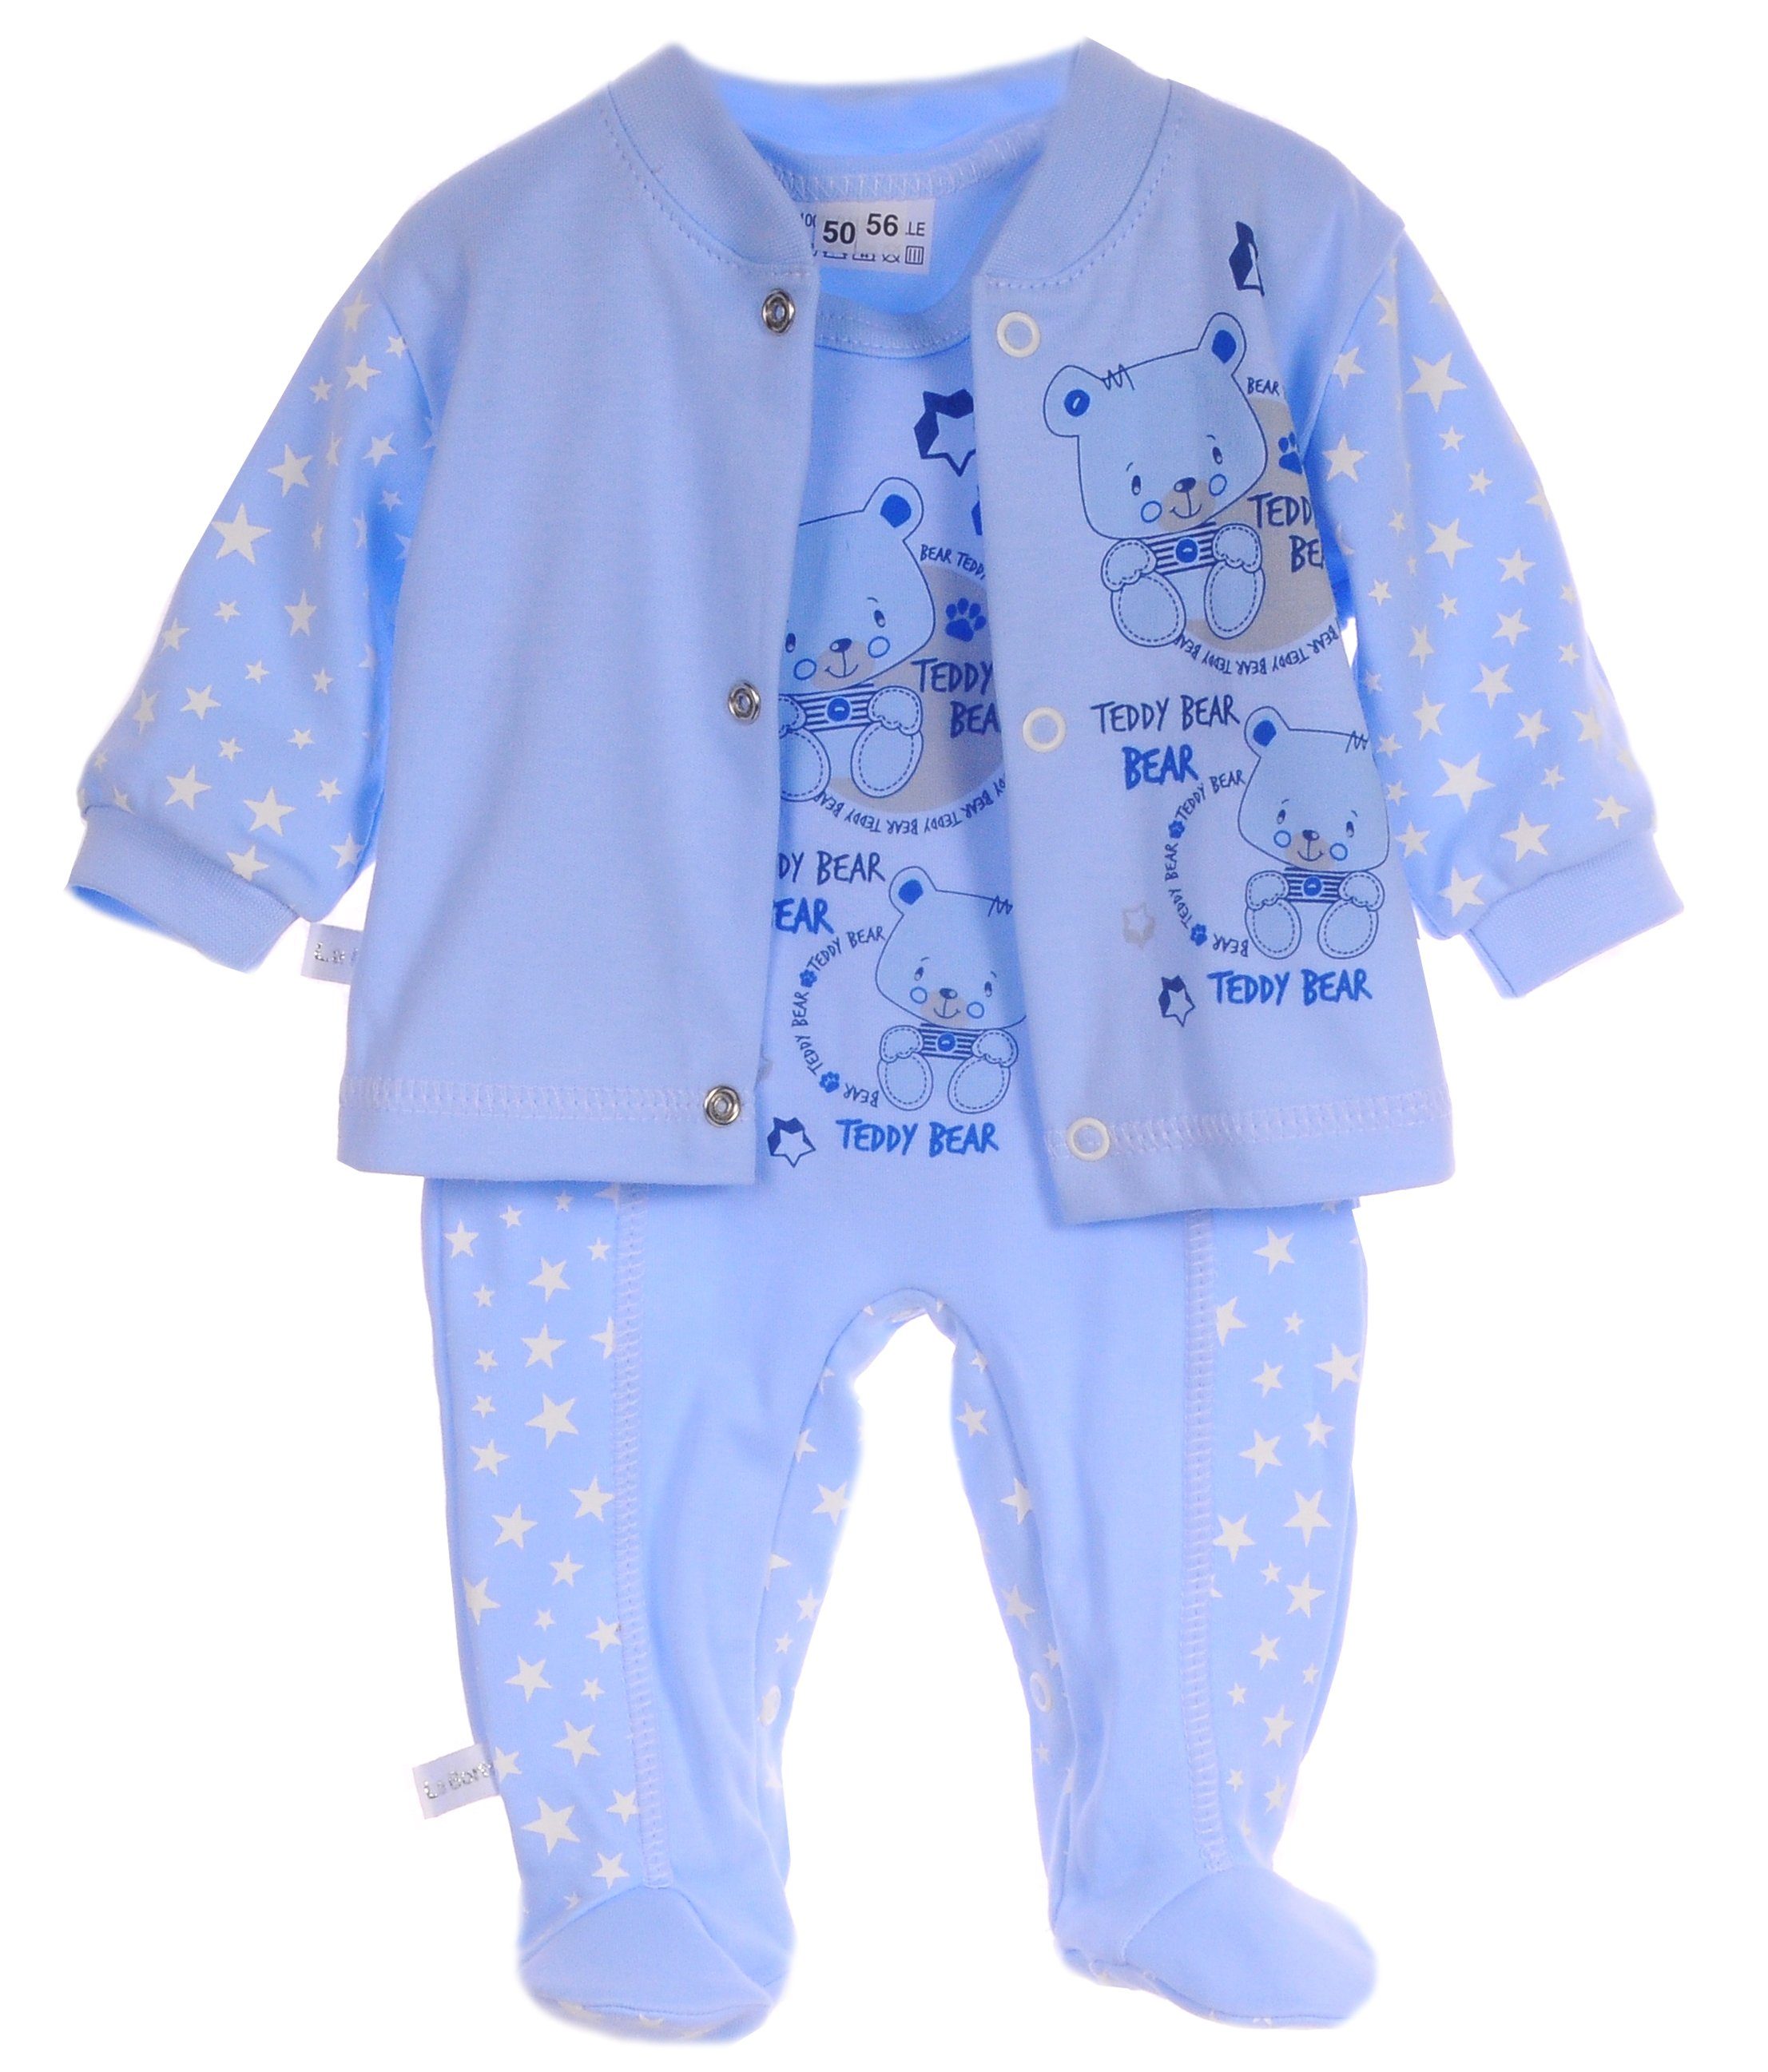 La Bortini Strampler Strampler und Hemdchen Set Baby Anzug 50 56 62 68 74